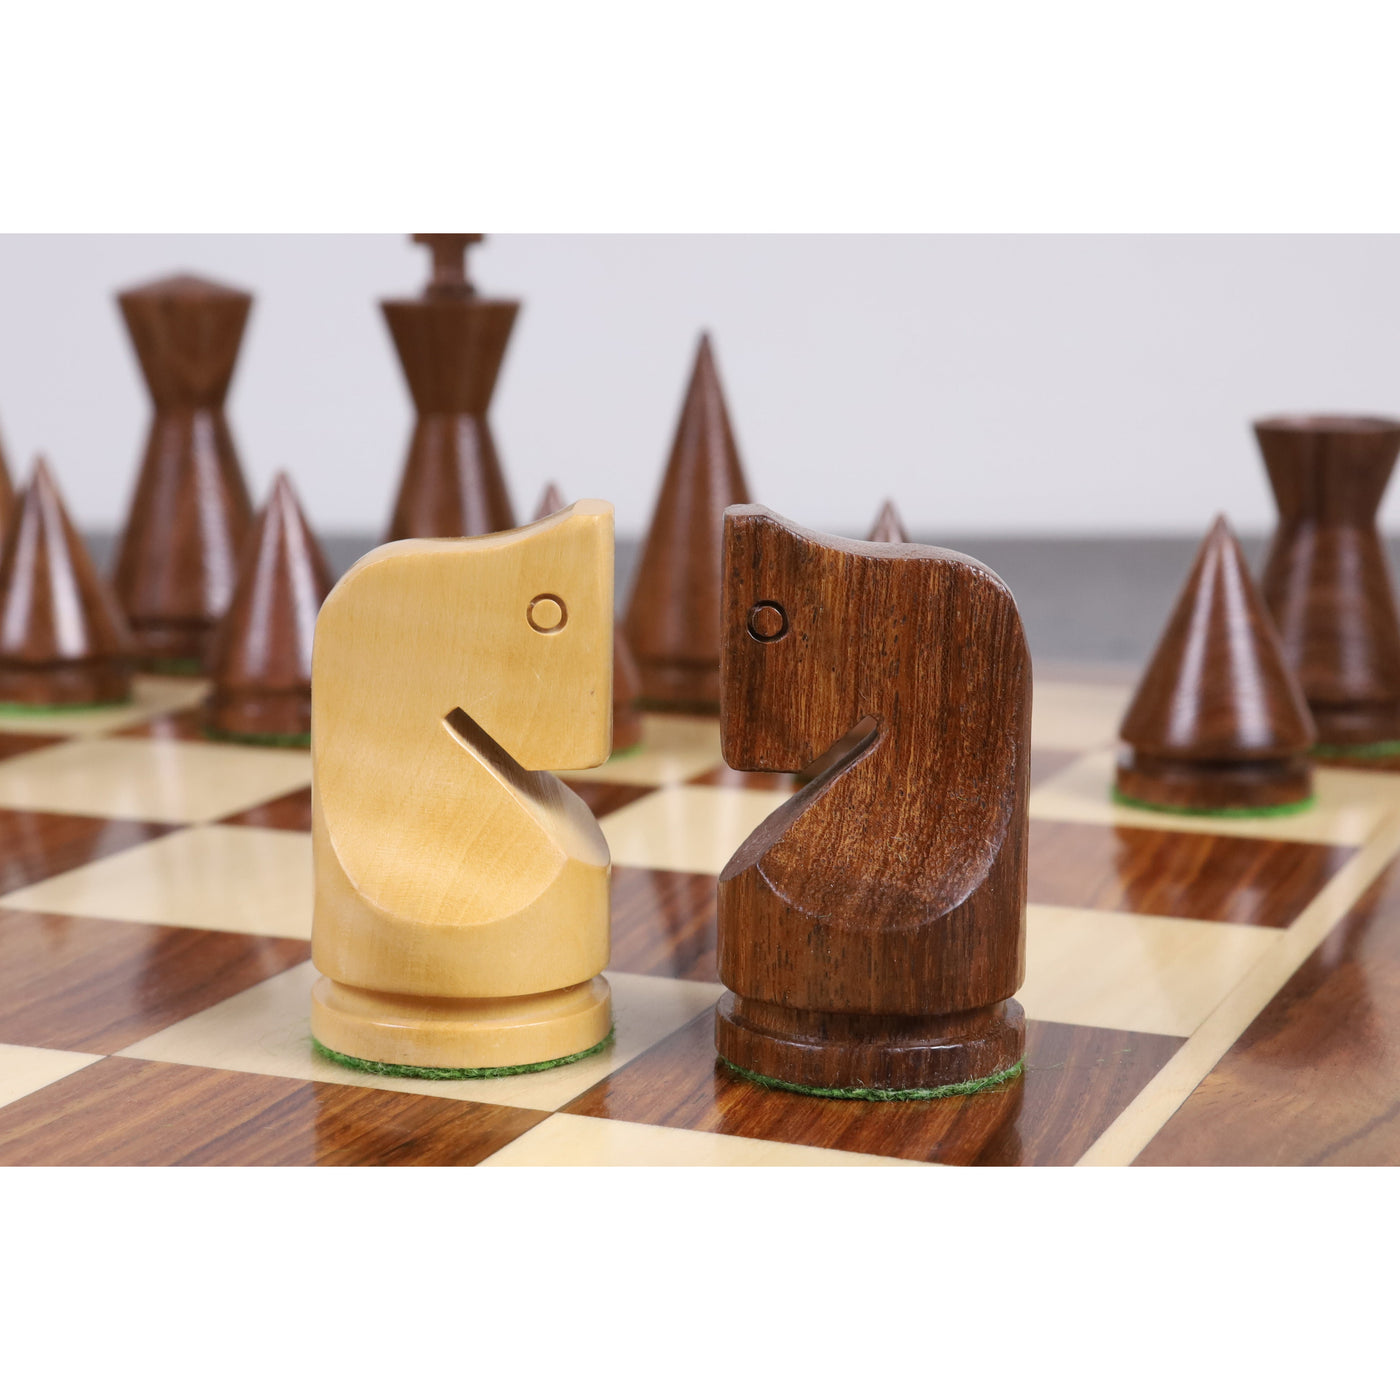 Russian Poni Minimalist Chess Pieces Only set -   Chess Set Handmade